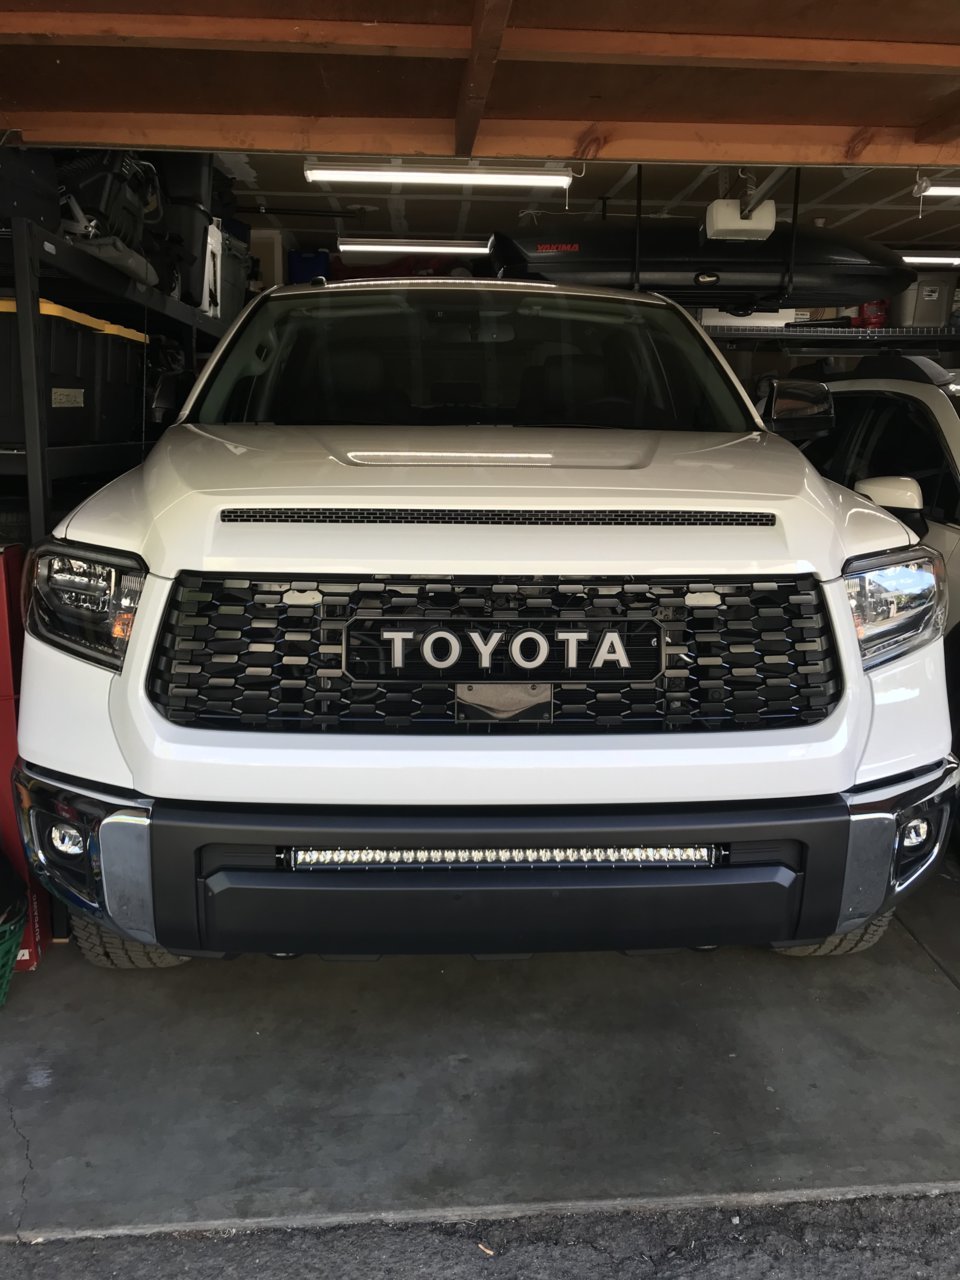 2019 TRD Pro Grill | Toyota Tundra Forum 2019 Tundra Trd Pro Grill With Sensor